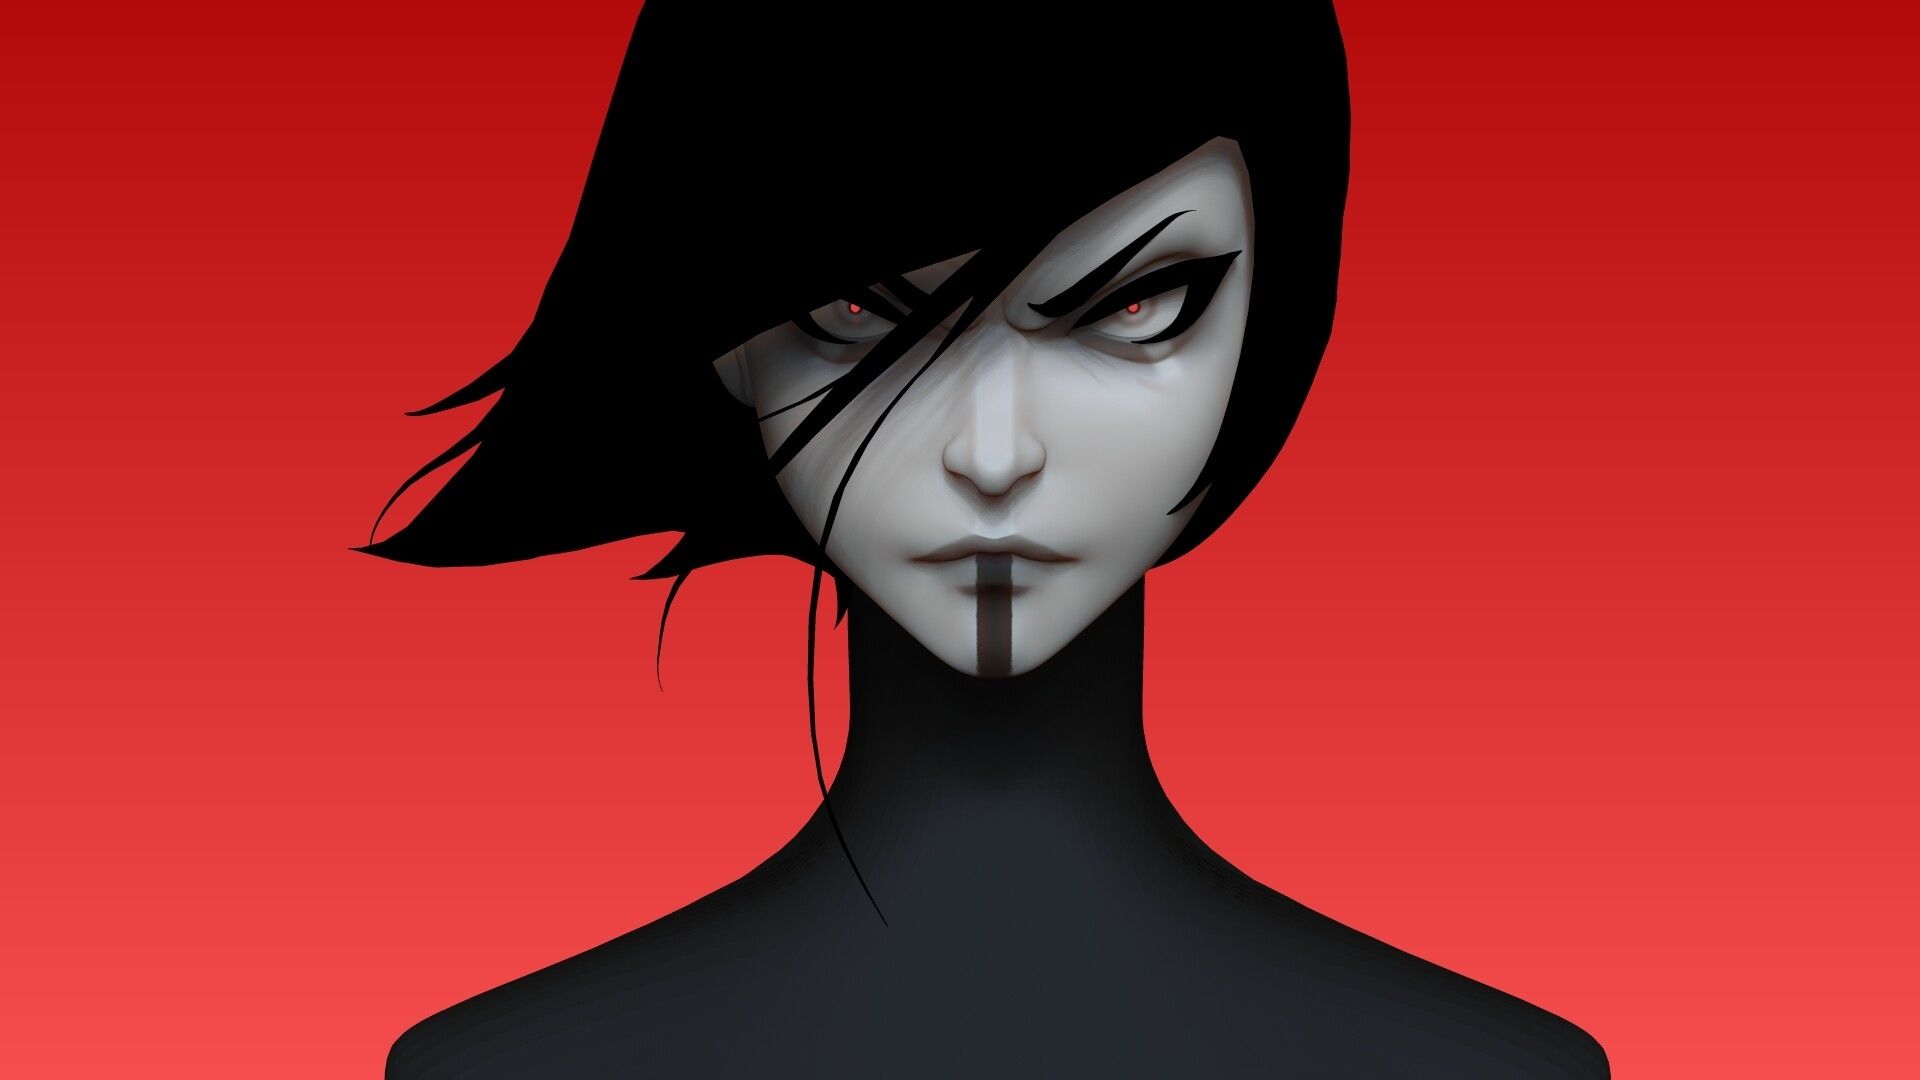 Cool Demon Girl Art Wallpaper, HD Artist 4K Wallpaper, Image, Photo and Background